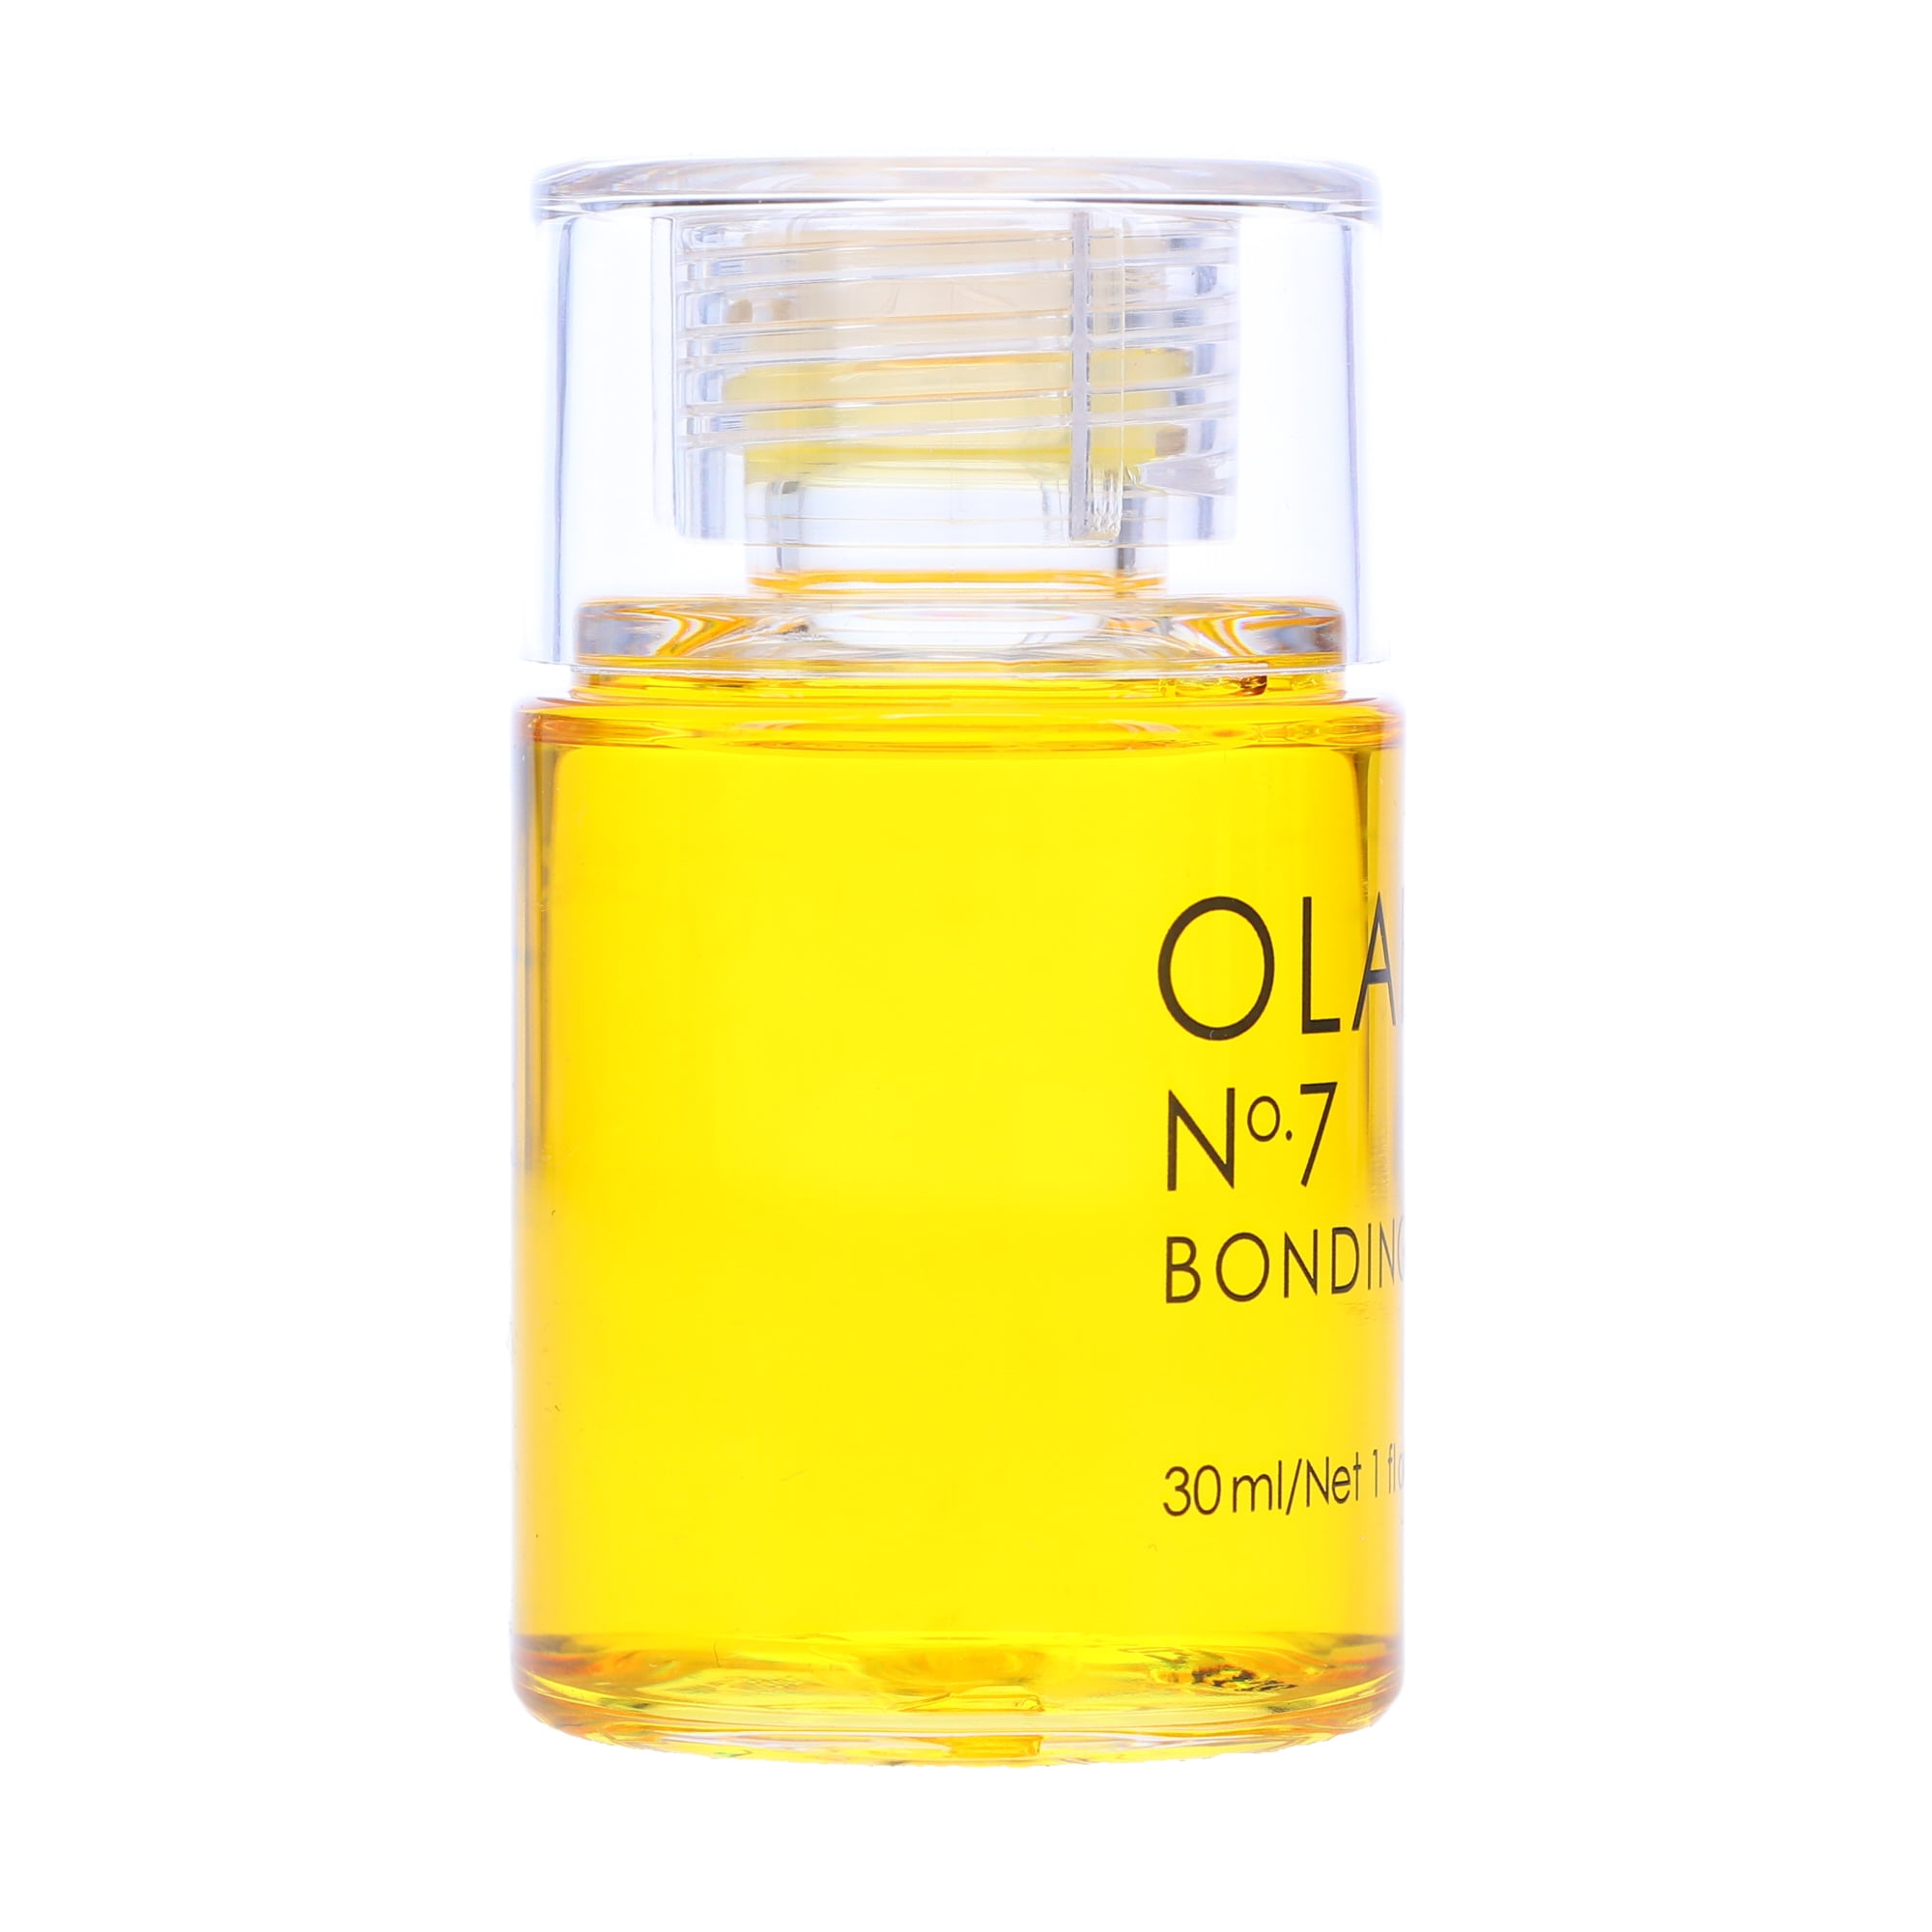 Olaplex bonding oil No. 7 - Comprar en Koko Beauty